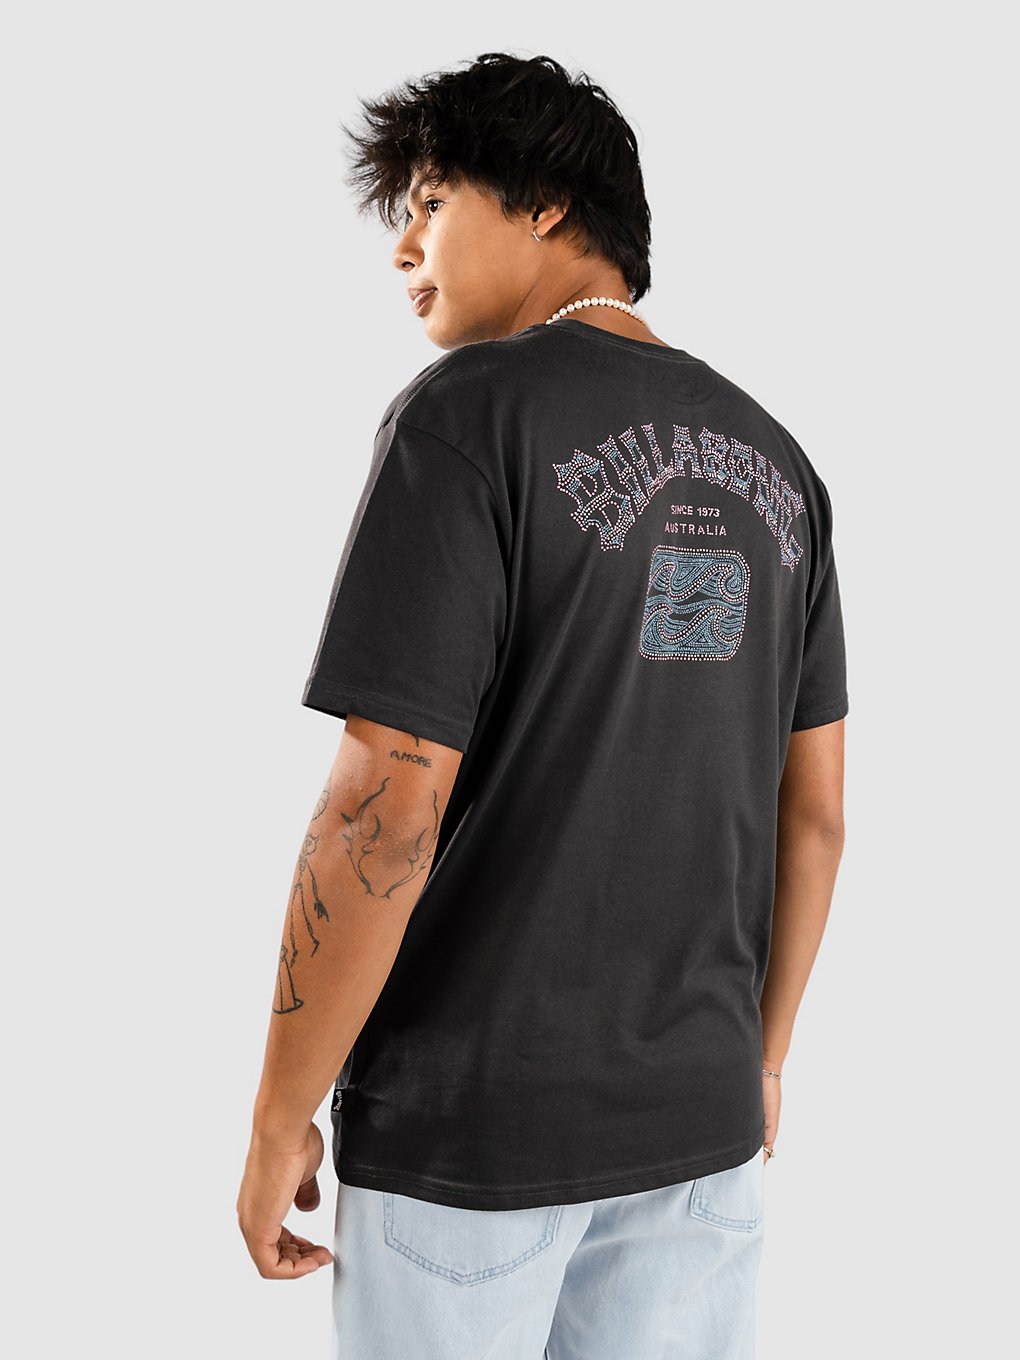 Billabong Theme Arch T-Shirt washed black kaufen